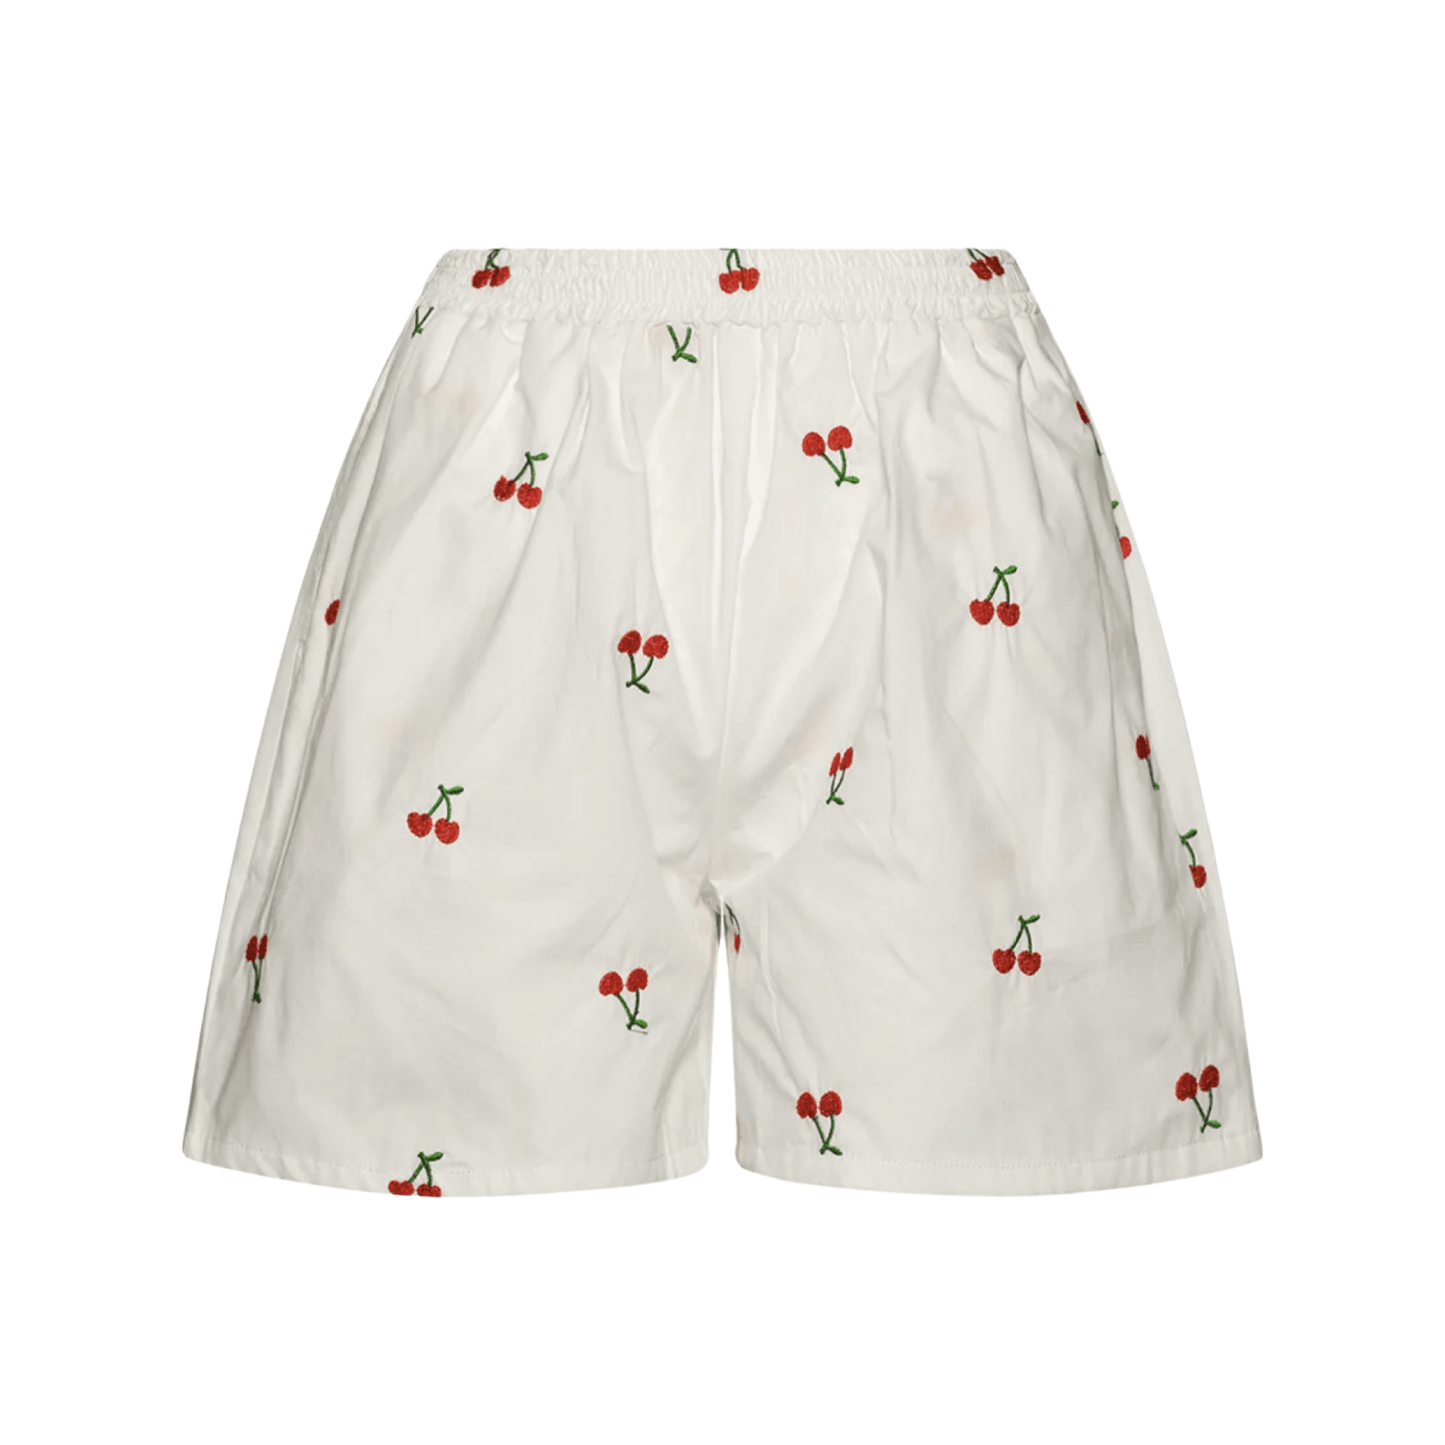 Noella - Travis shorts - White cherry